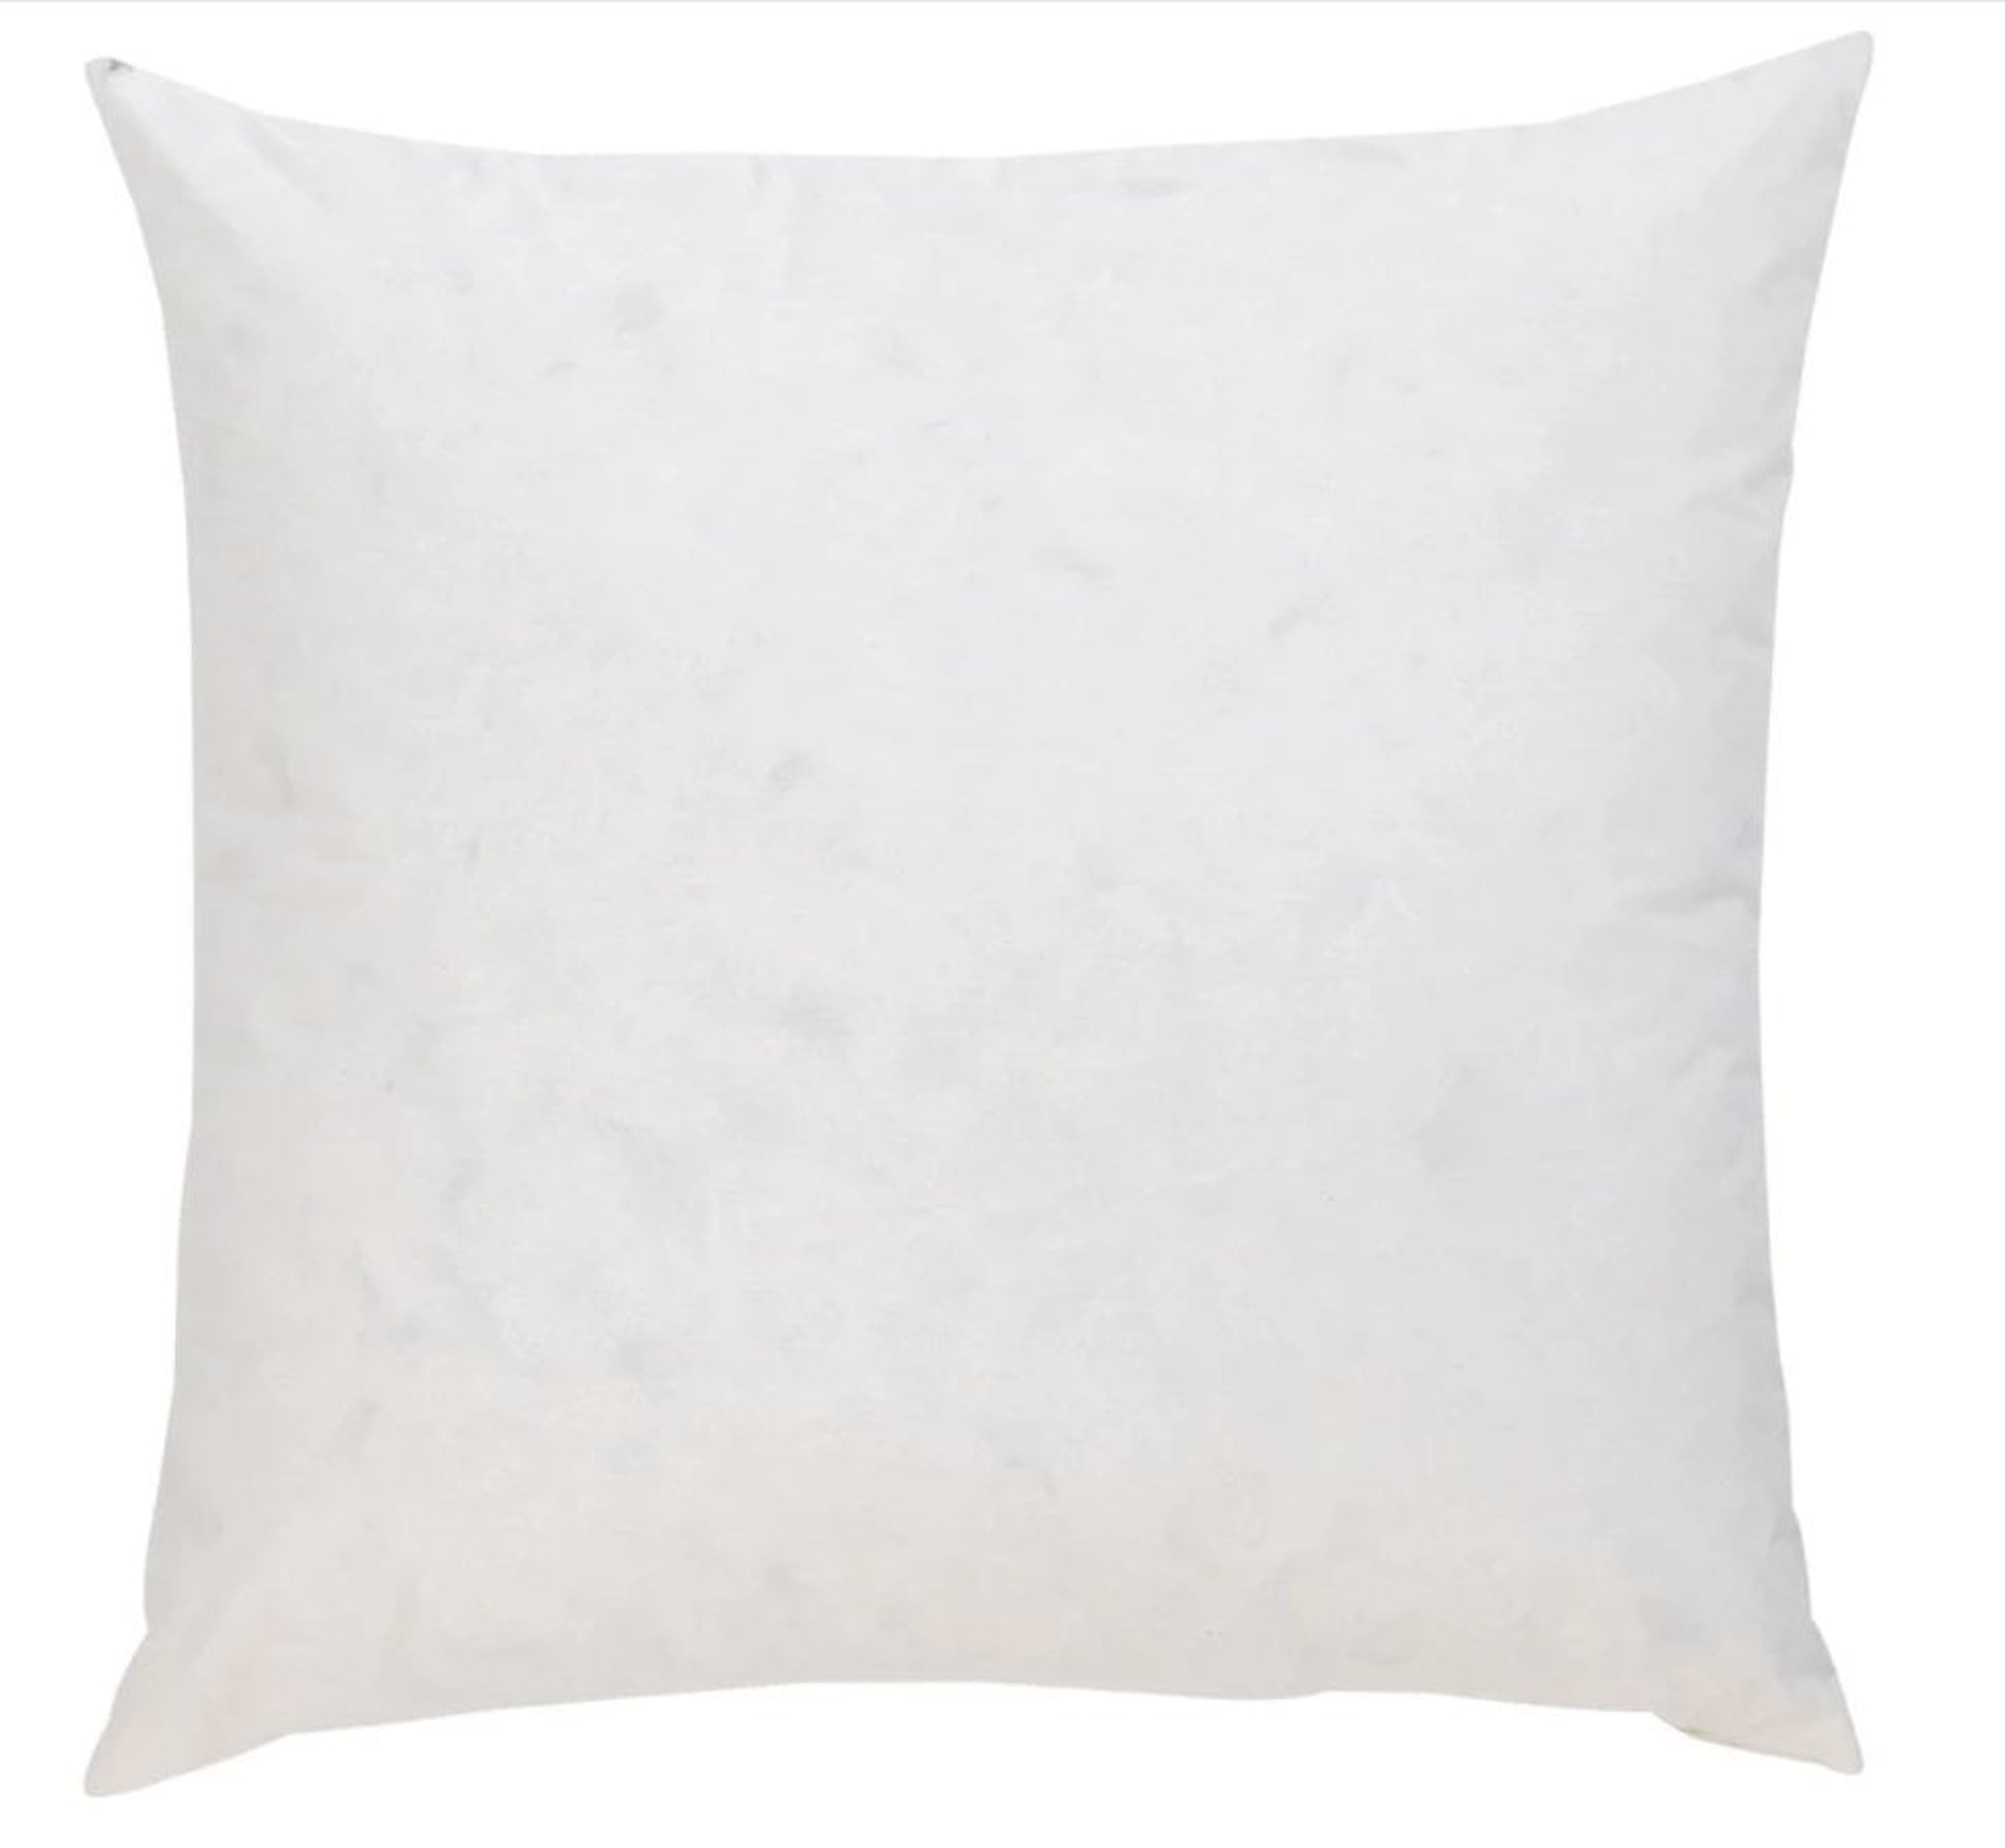 Premium Pillow Insert 22x22 - McGee & Co.